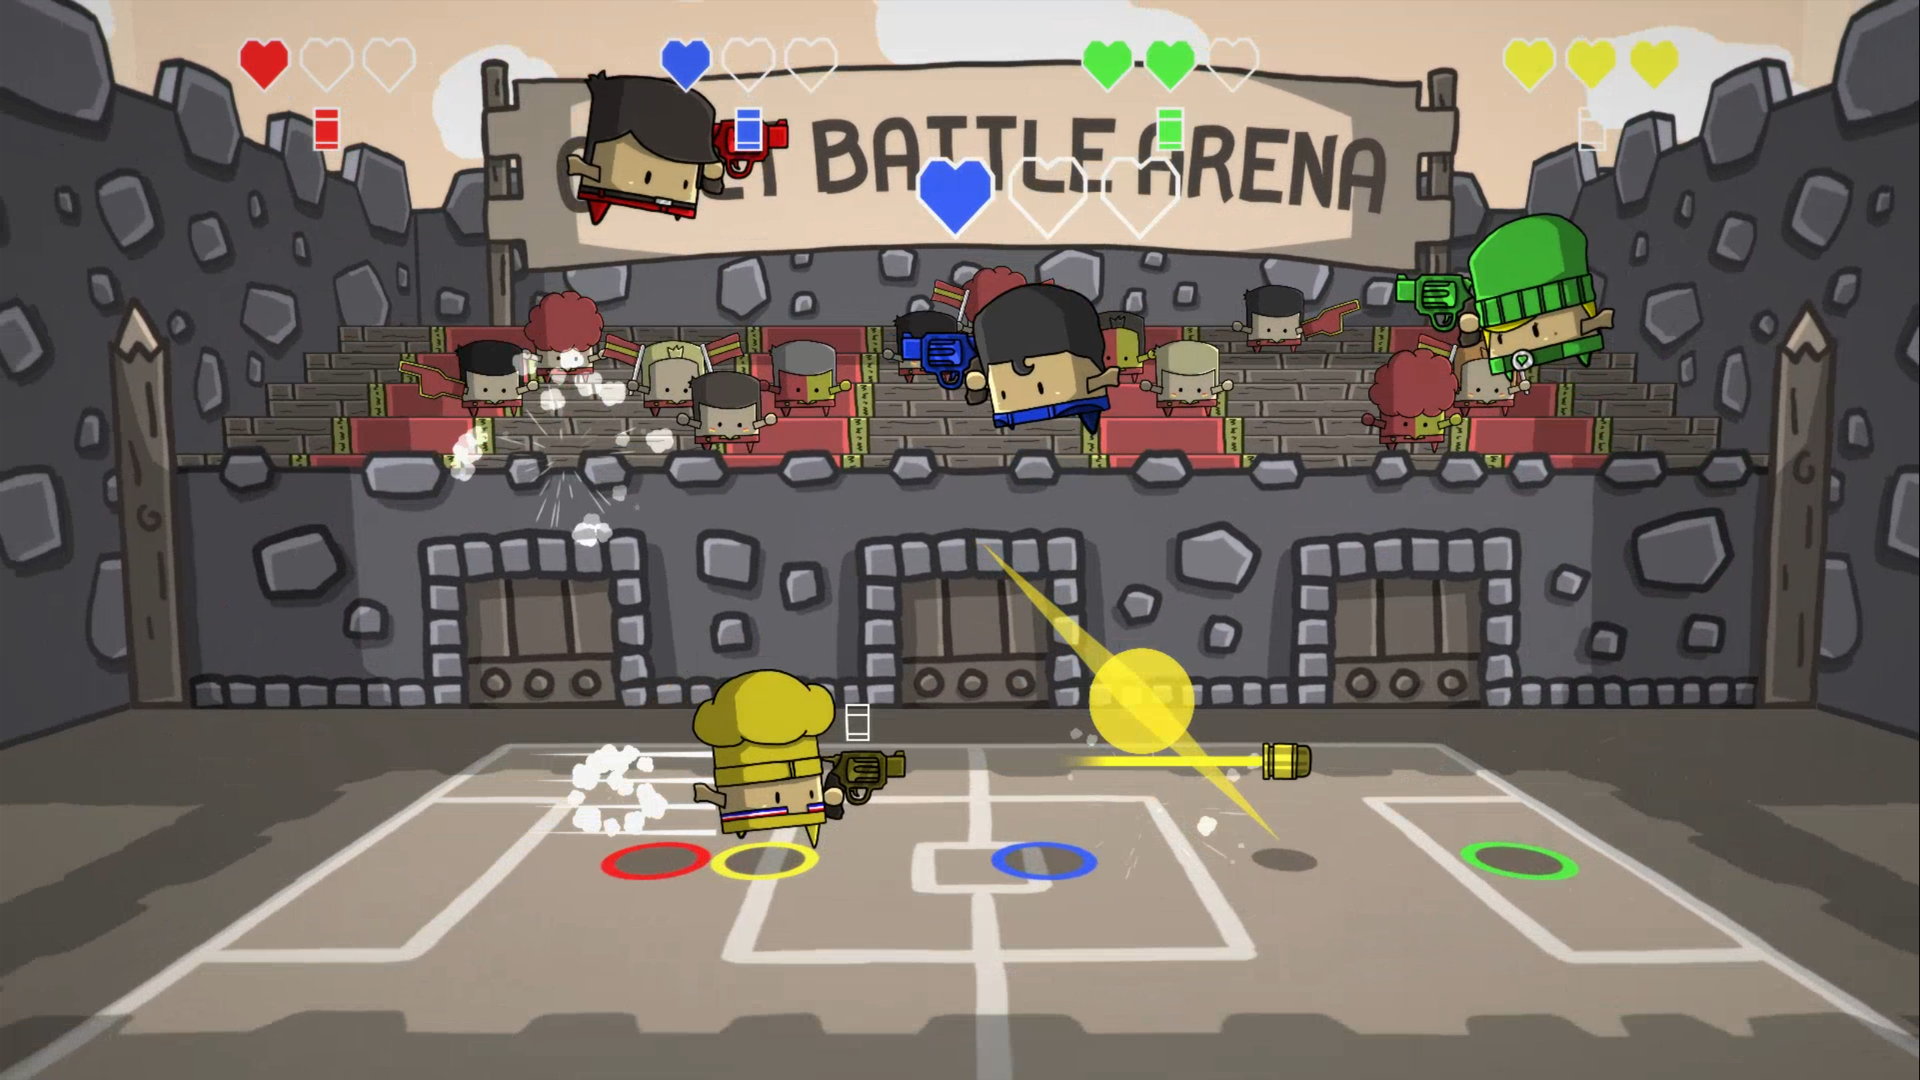 Игра Battle Arena. Гилт игра. Инферно Battle Arena. Pixel Battle Arena background.